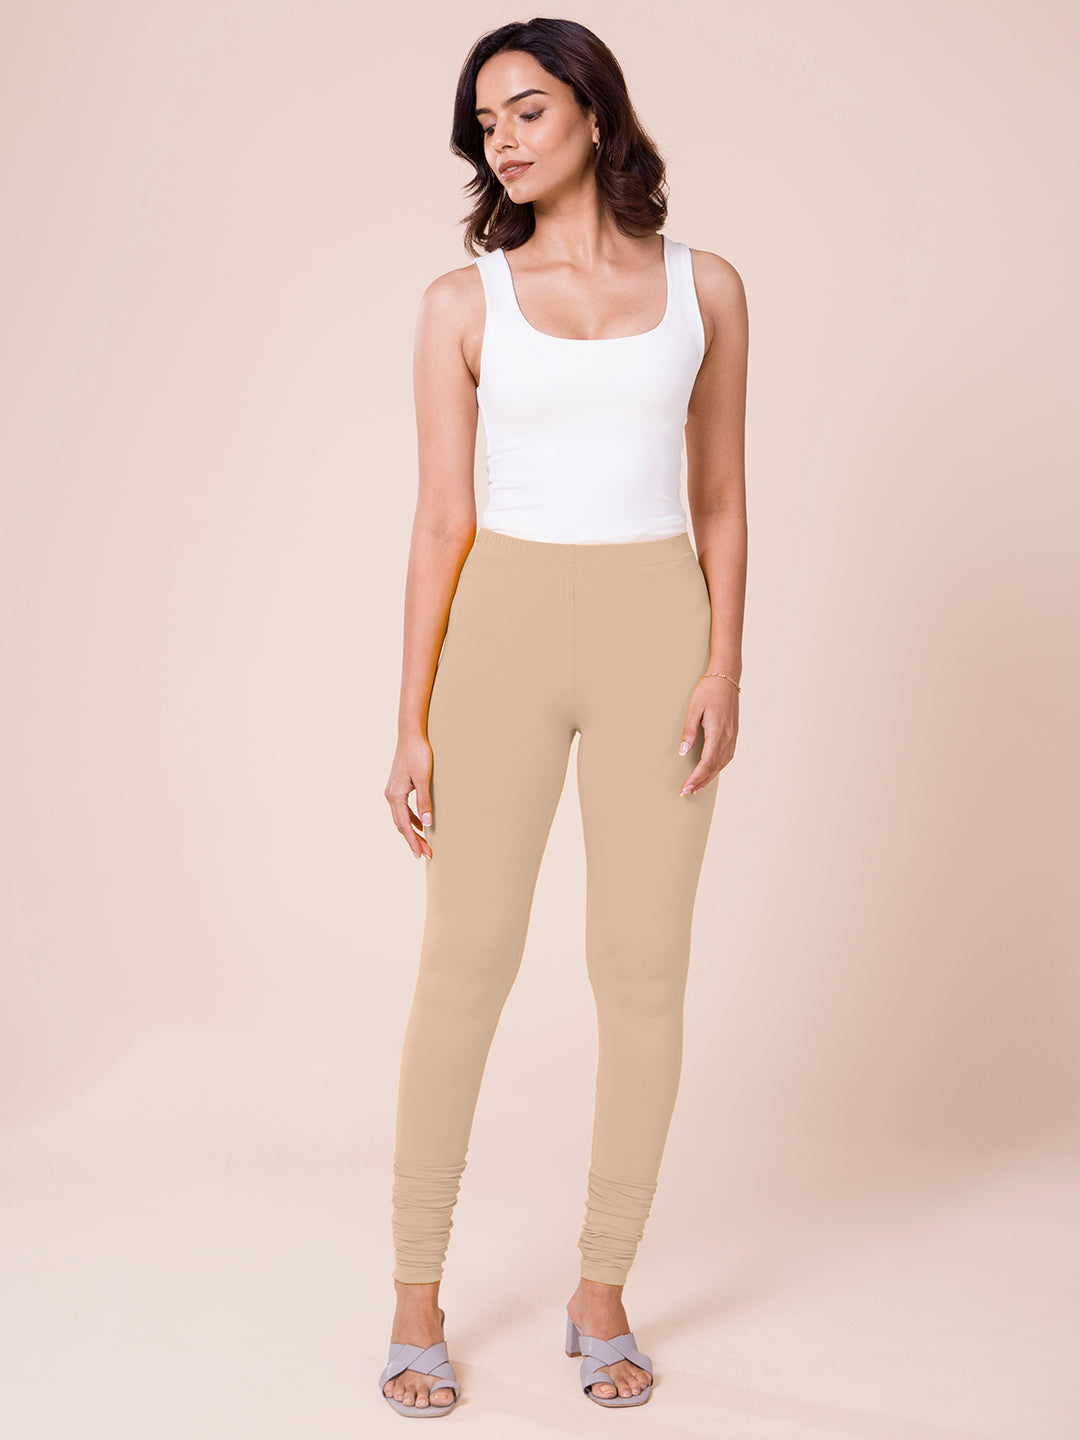 Women's cotton leggings - Beige melange - Dilling